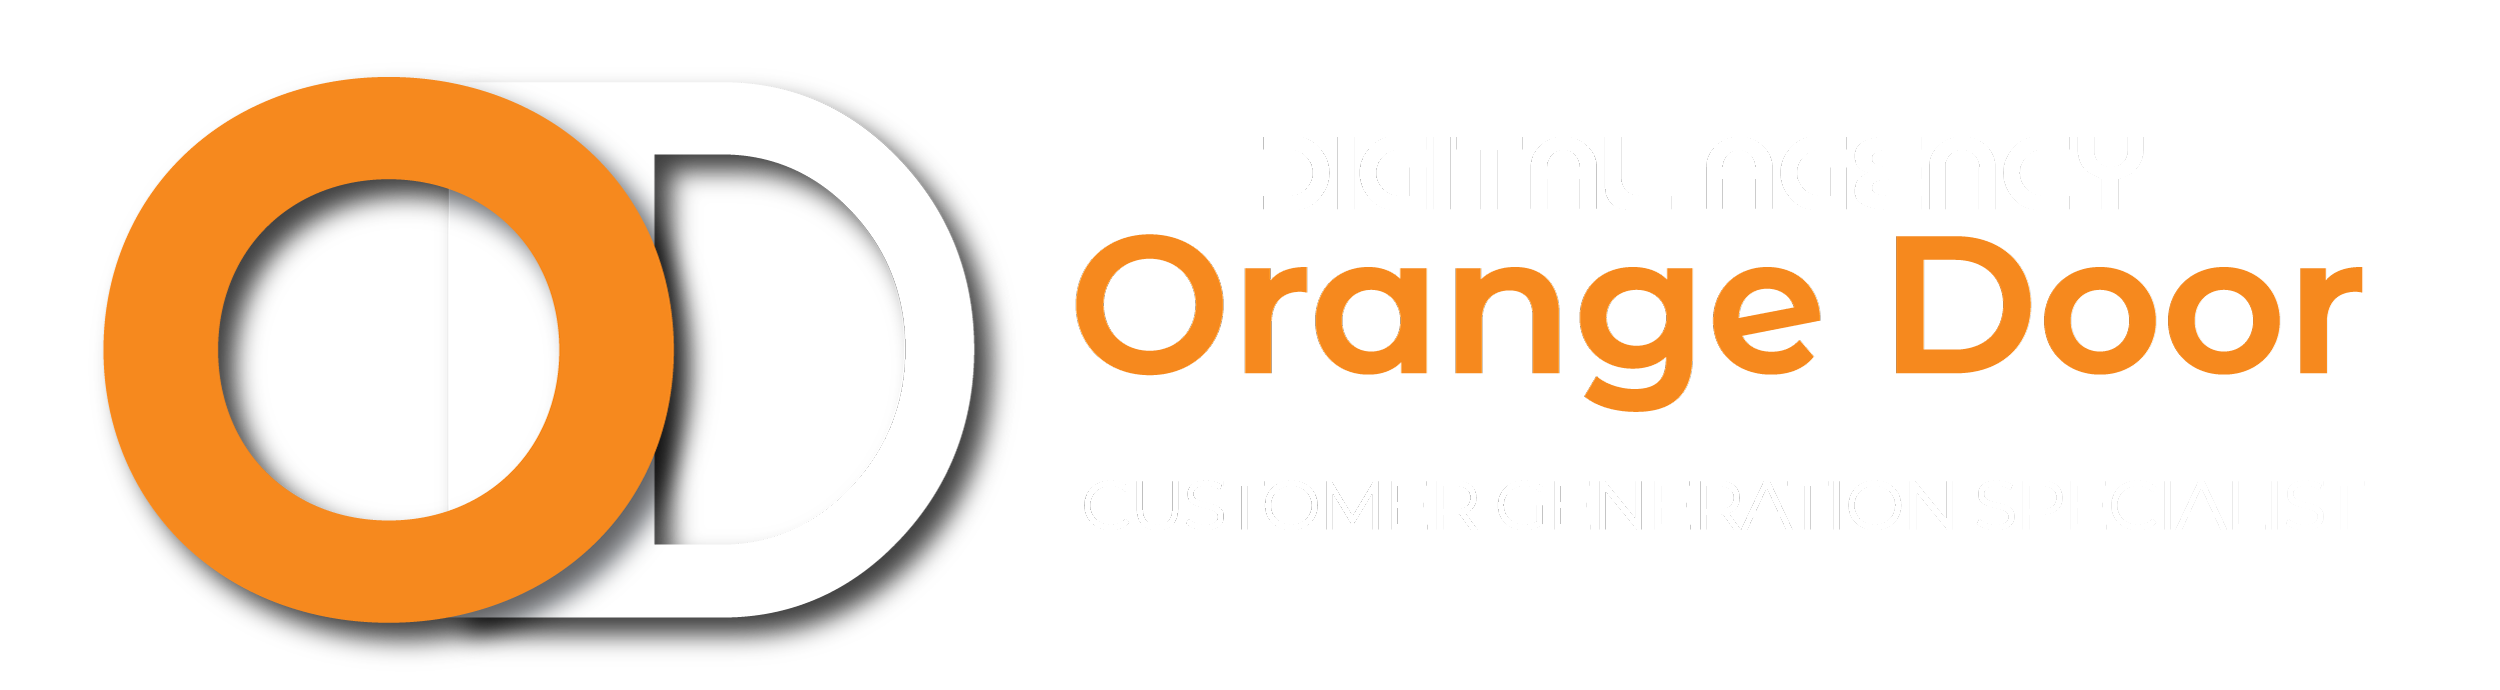 Orange Door Digital Agency www.orangedoordigitalagency.com